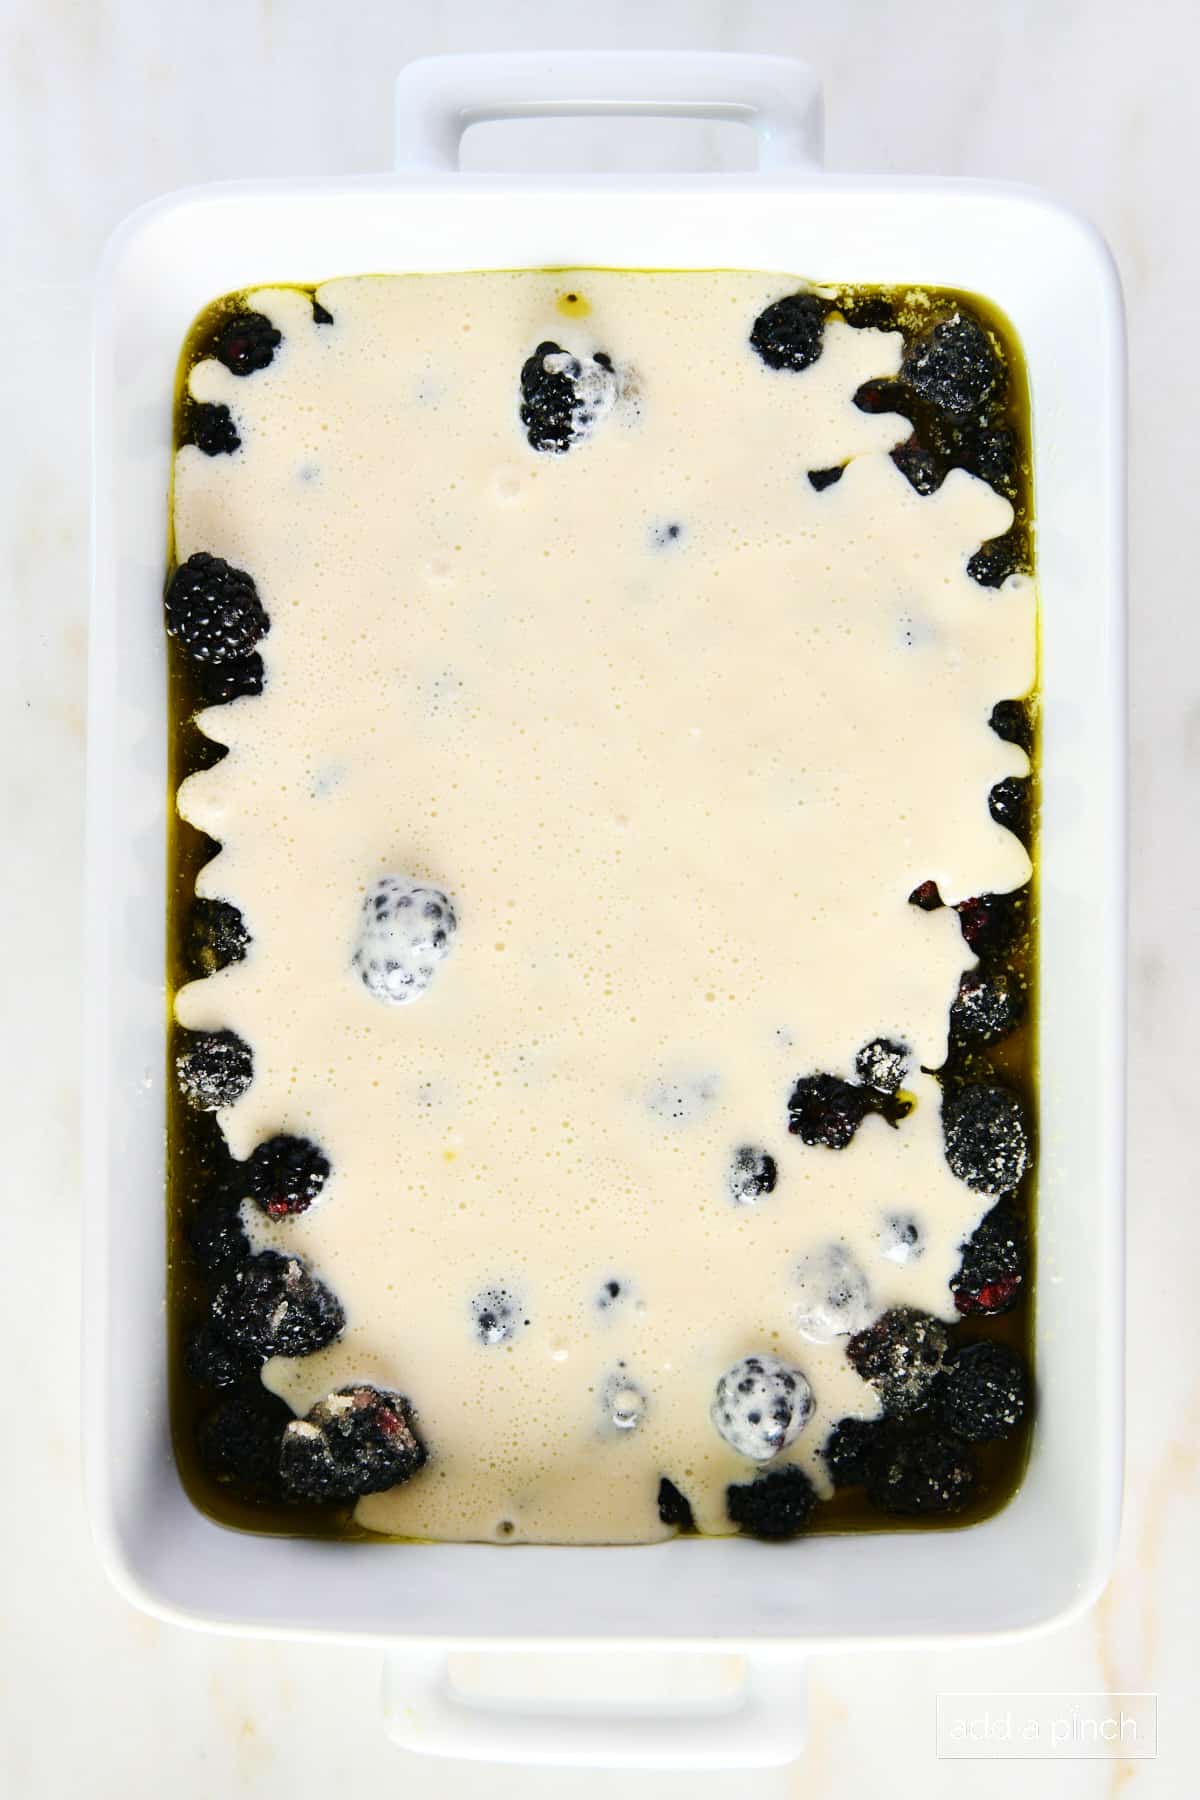 Photo of cobbler batter poured over blackberries and butter.